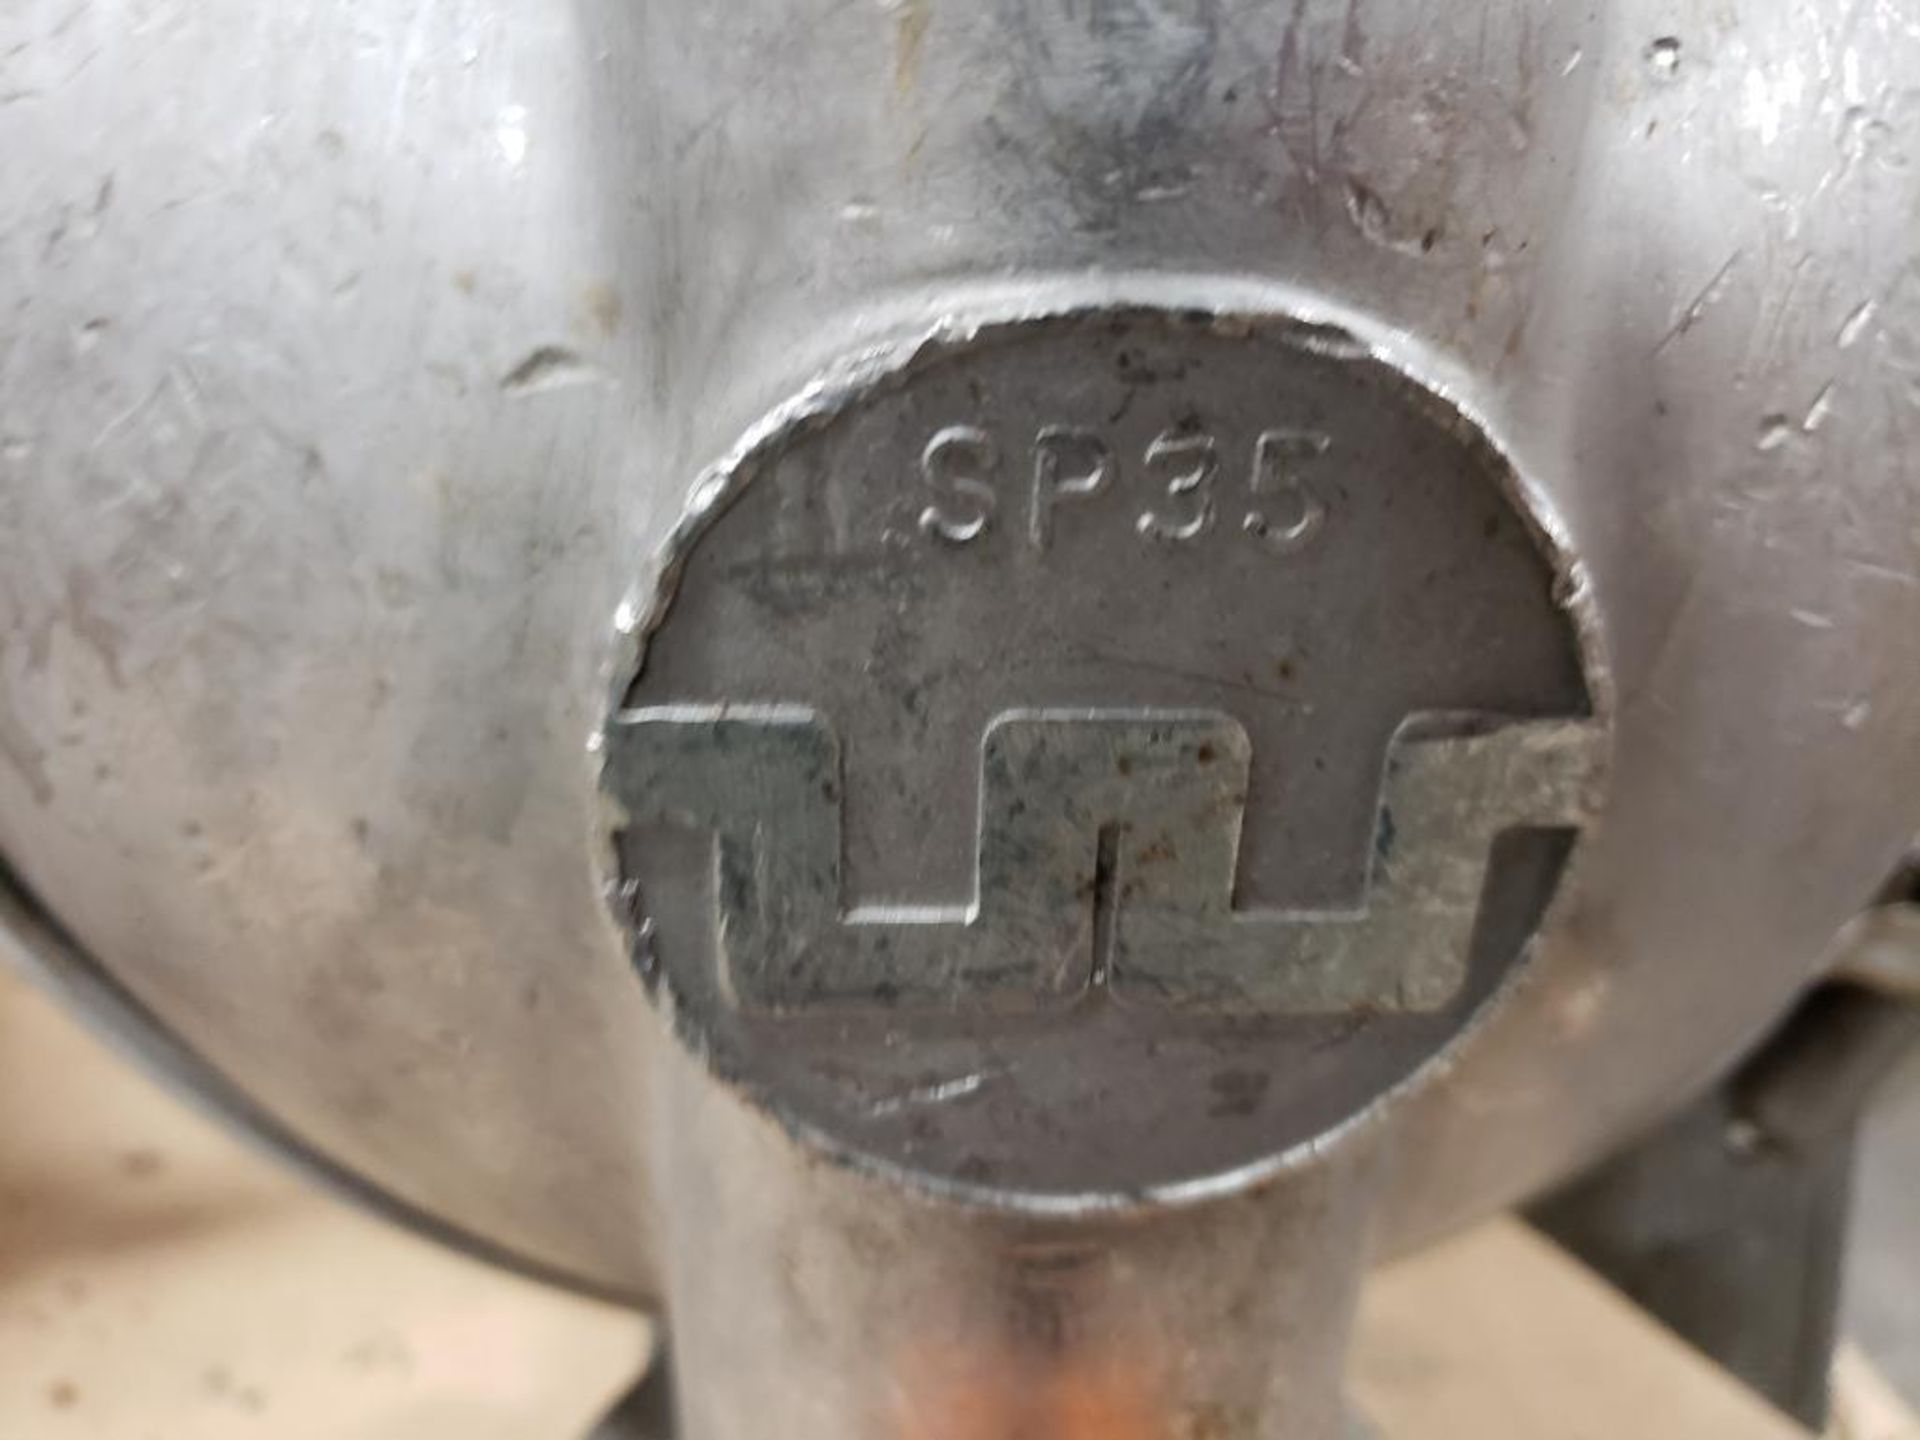 Wilden Stainless steel diaphragm pump. Model SP35. - Image 2 of 4